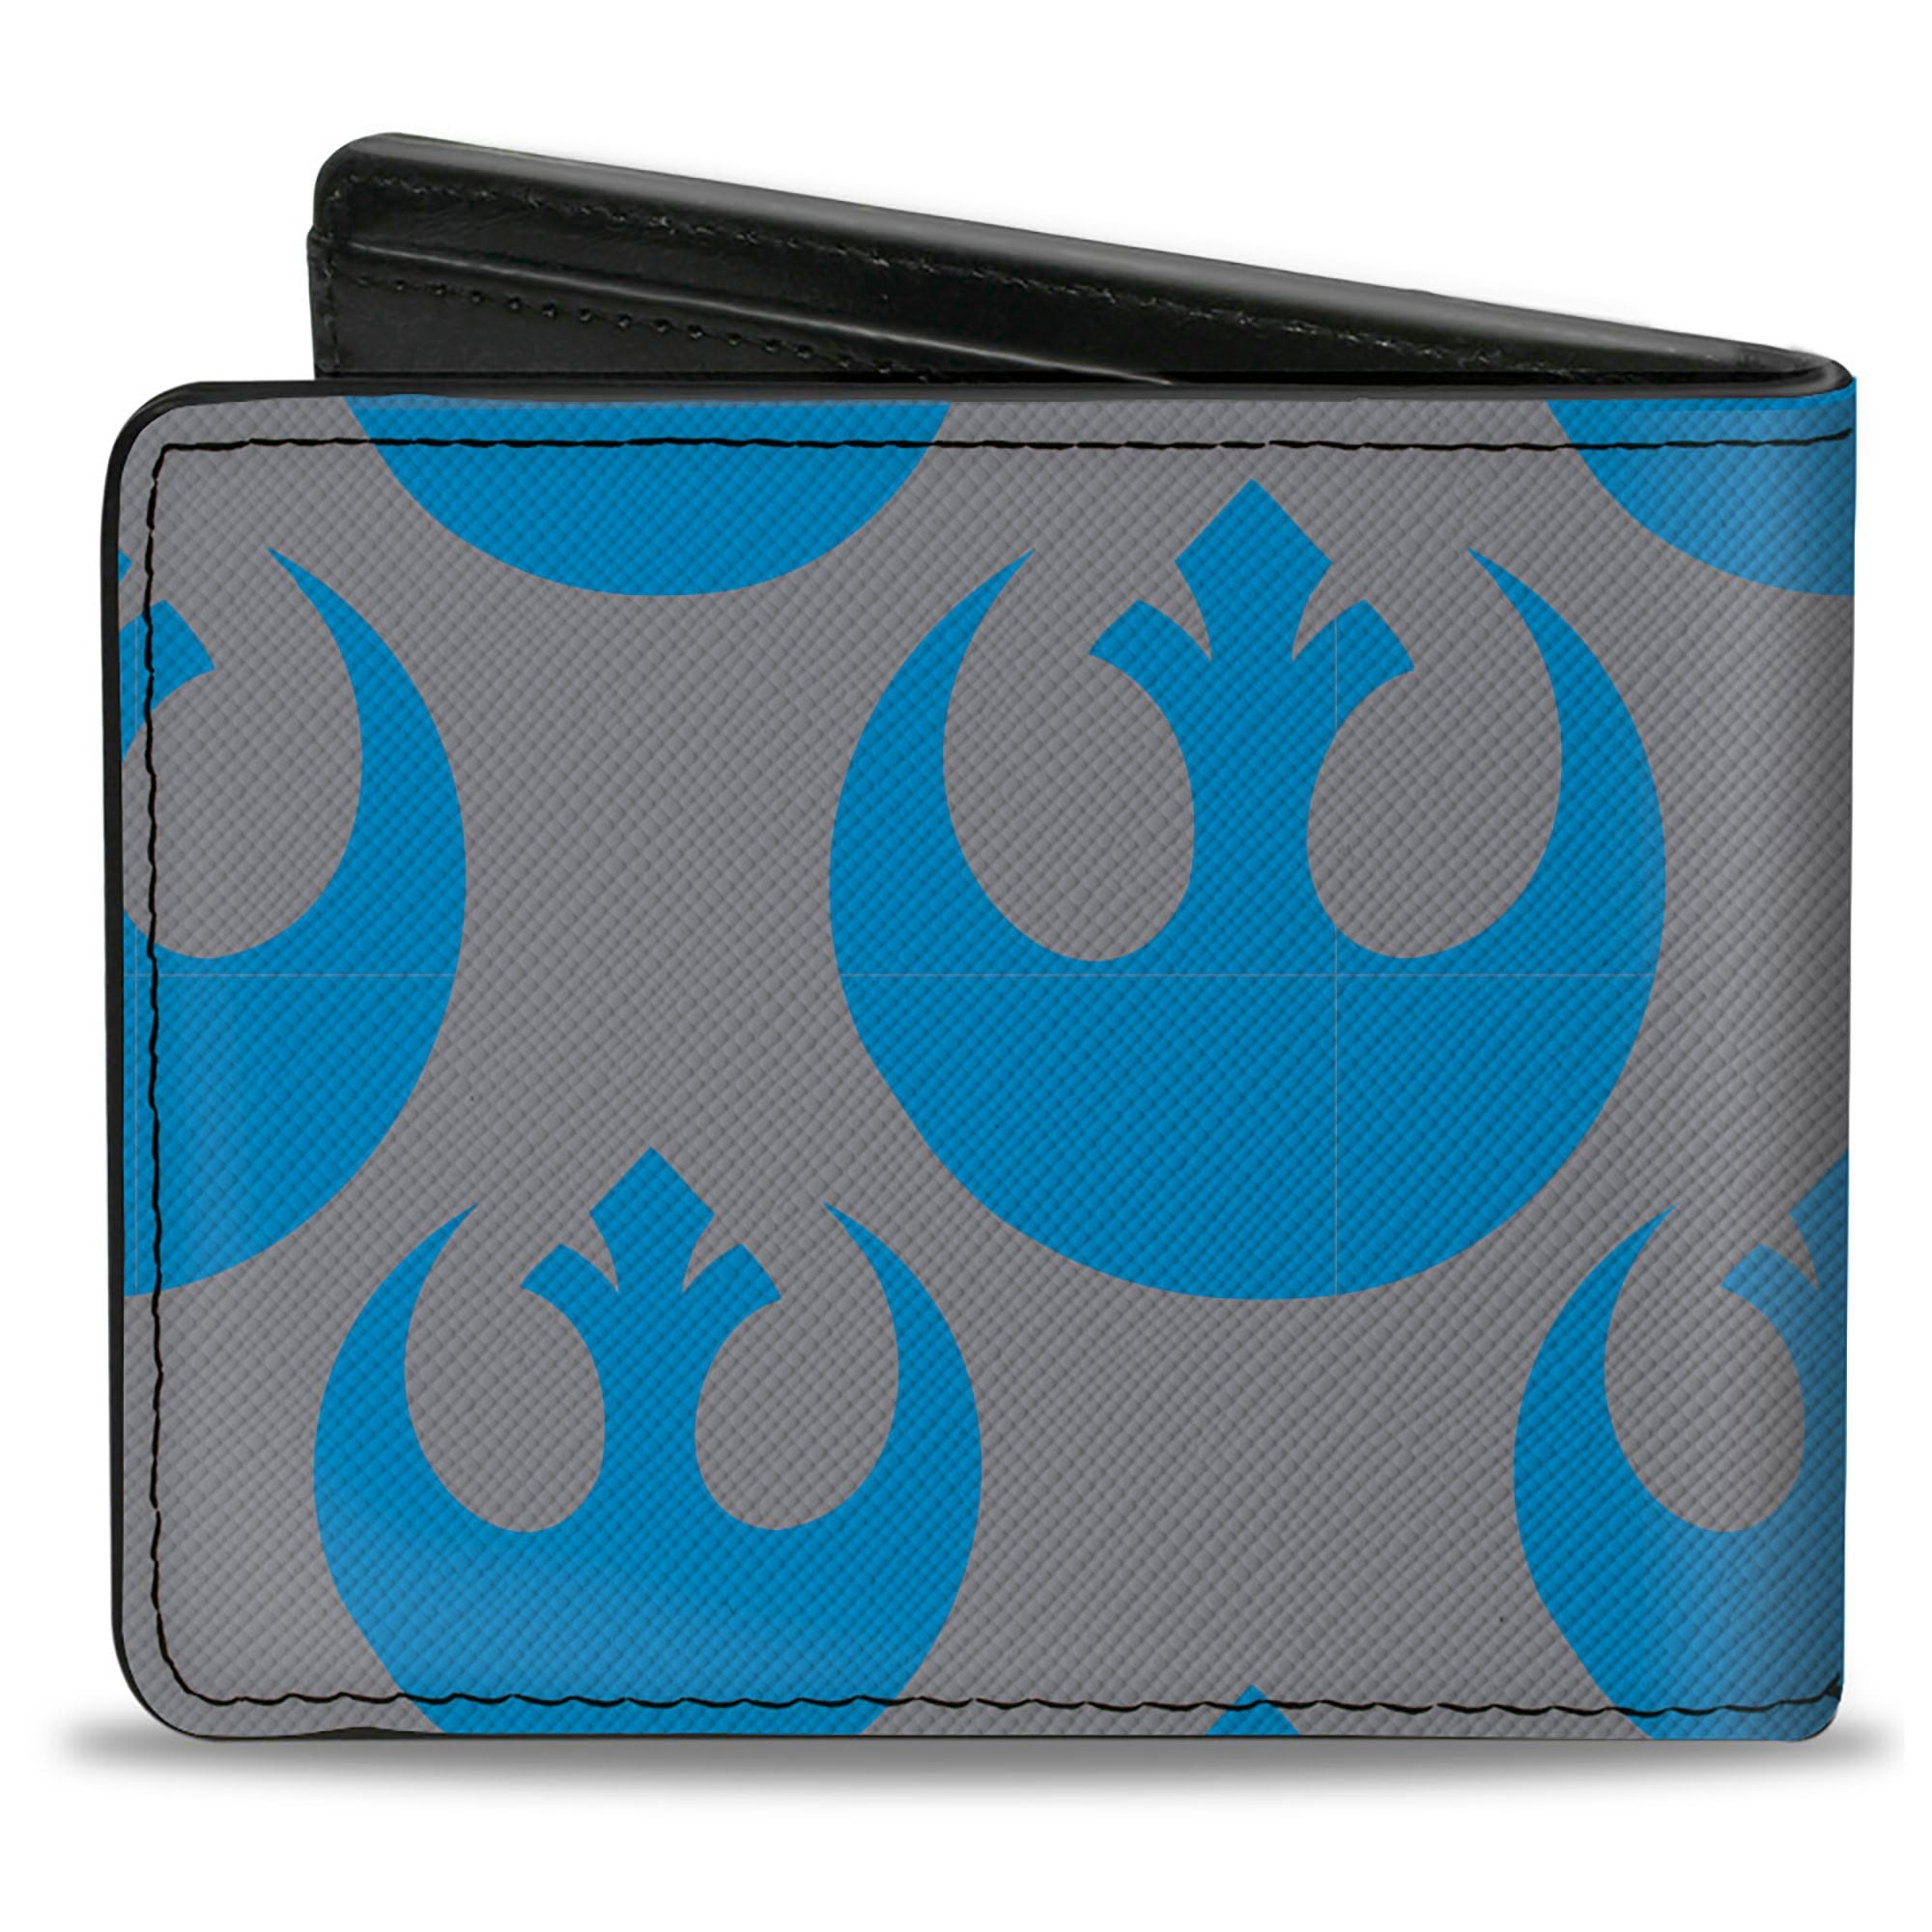 Bi-Fold Wallet - Star Wars R2-D2 Pose and Rebel Alliance Insignia Gray/Blue